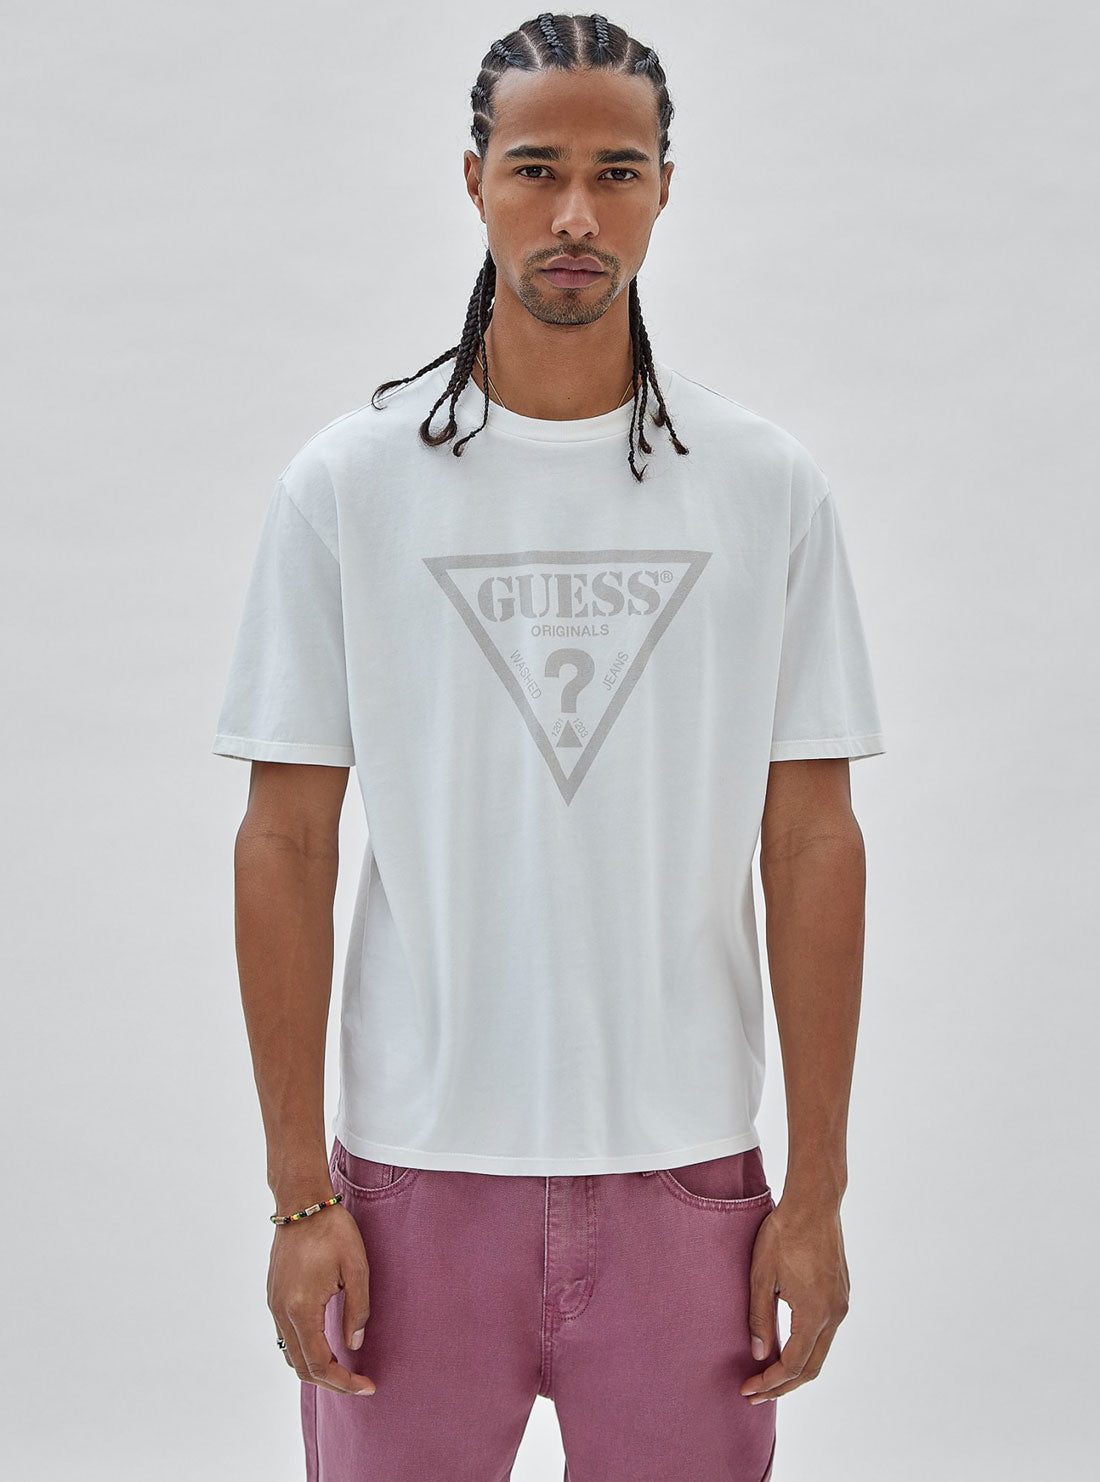 Guess Originals White Vintage Triangle Logo T-Shirt | GUESS Men's Apparel | front view